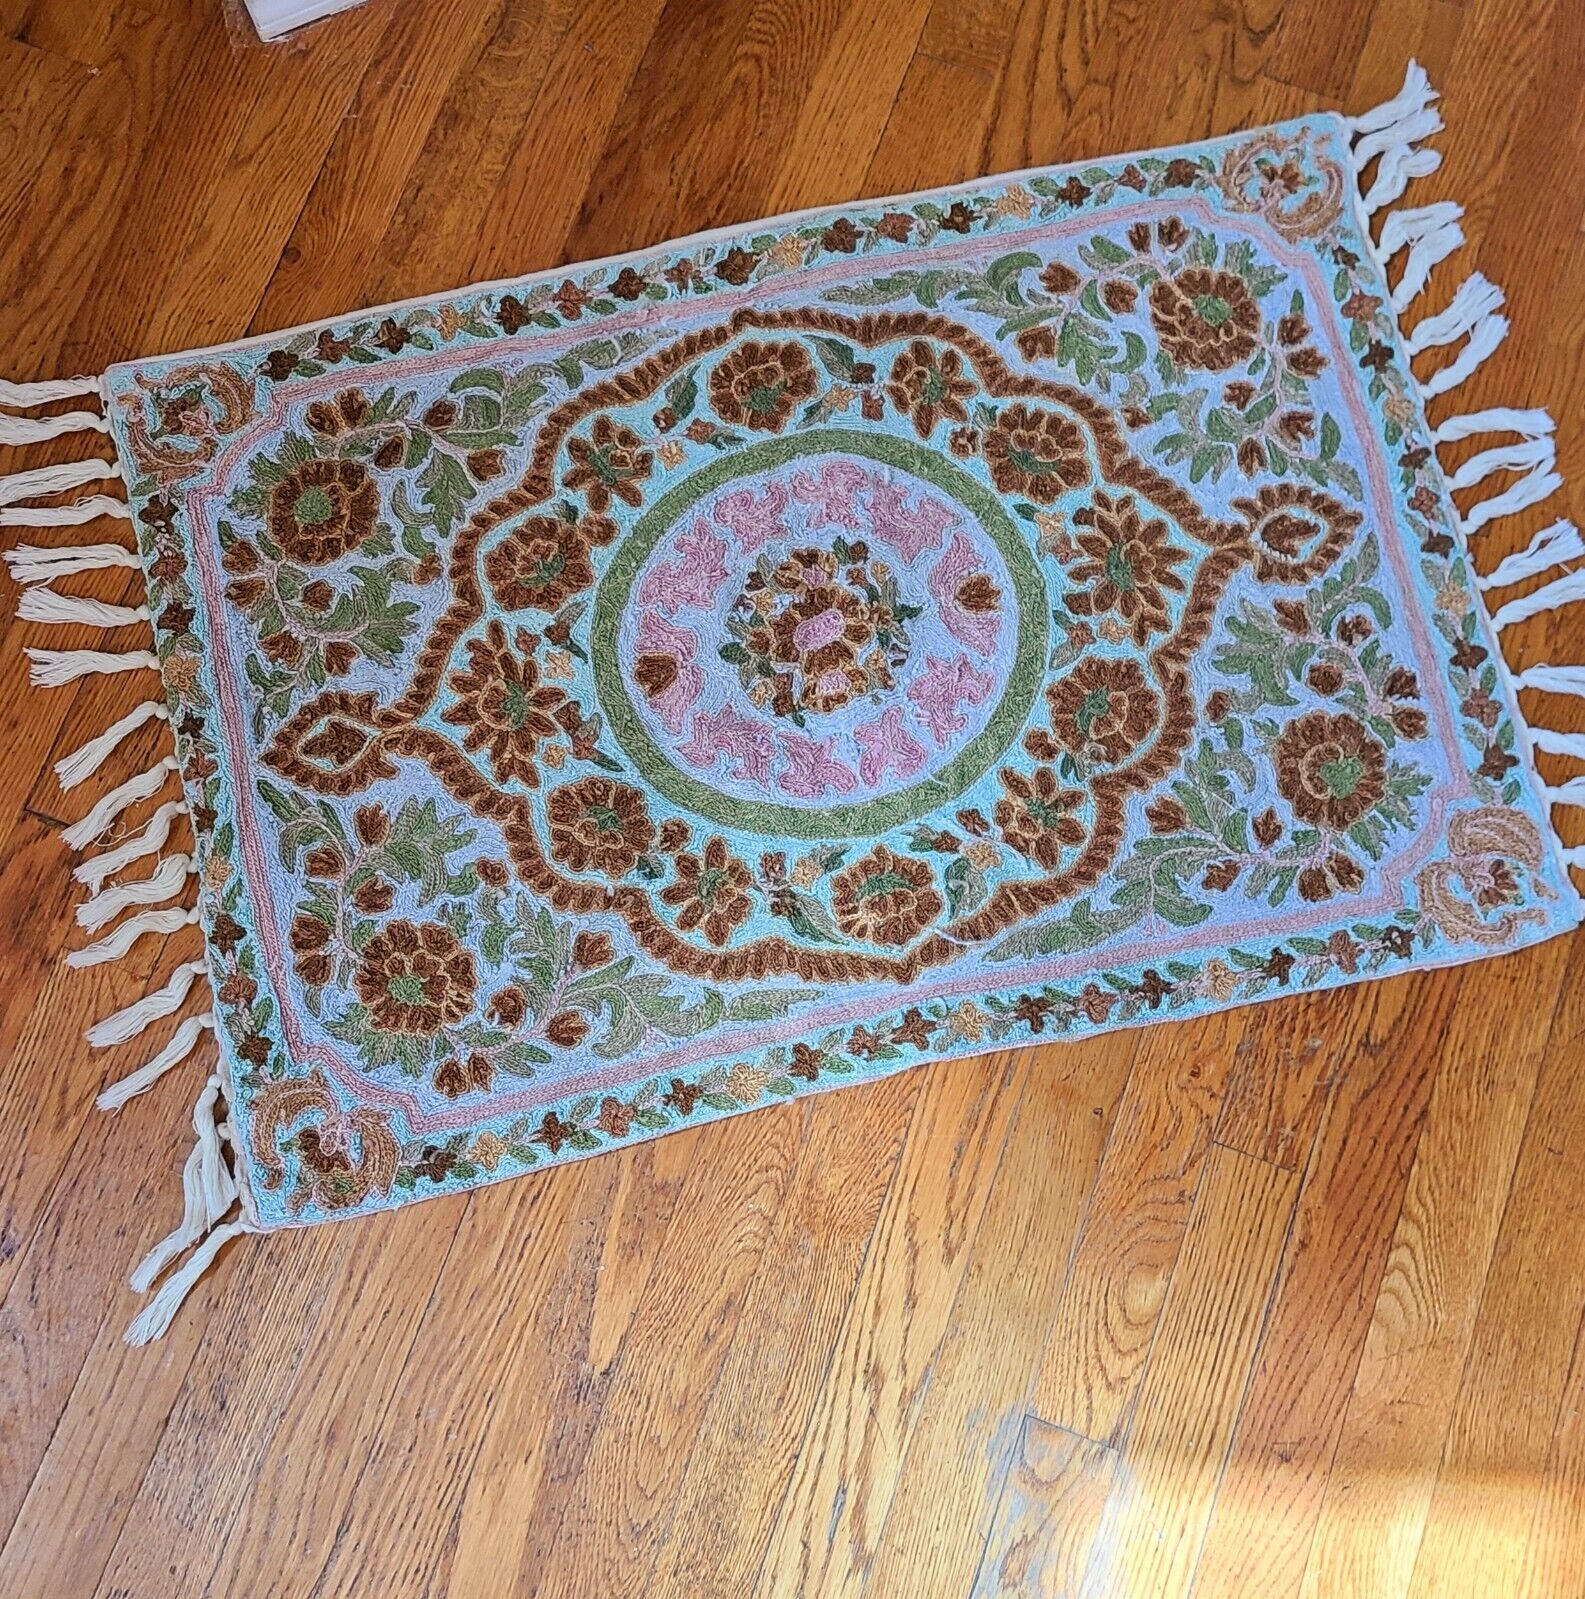 Vintage Embroidered Tapestry Area Rug Fringed Boho Decor